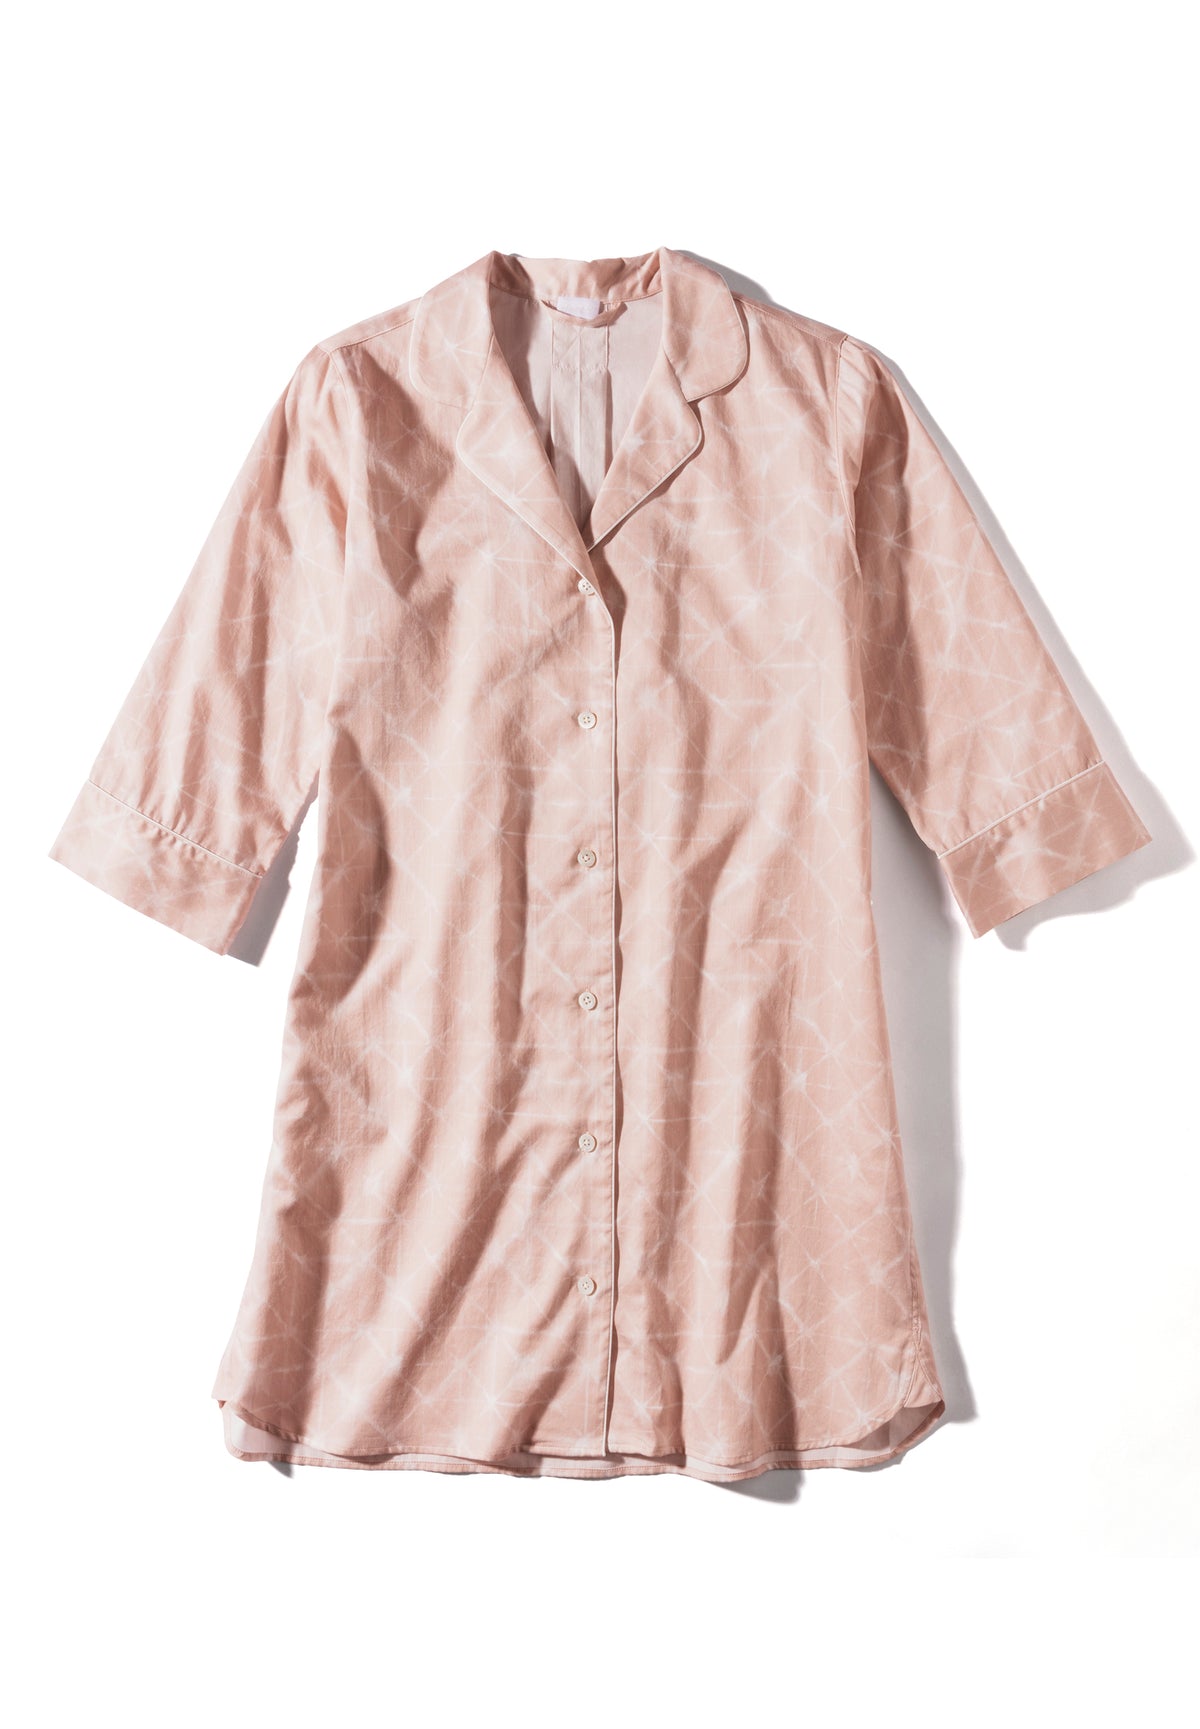 Cotton Sateen Print | Tee-shirt de nuit manches 3/4 - geo-batic rose